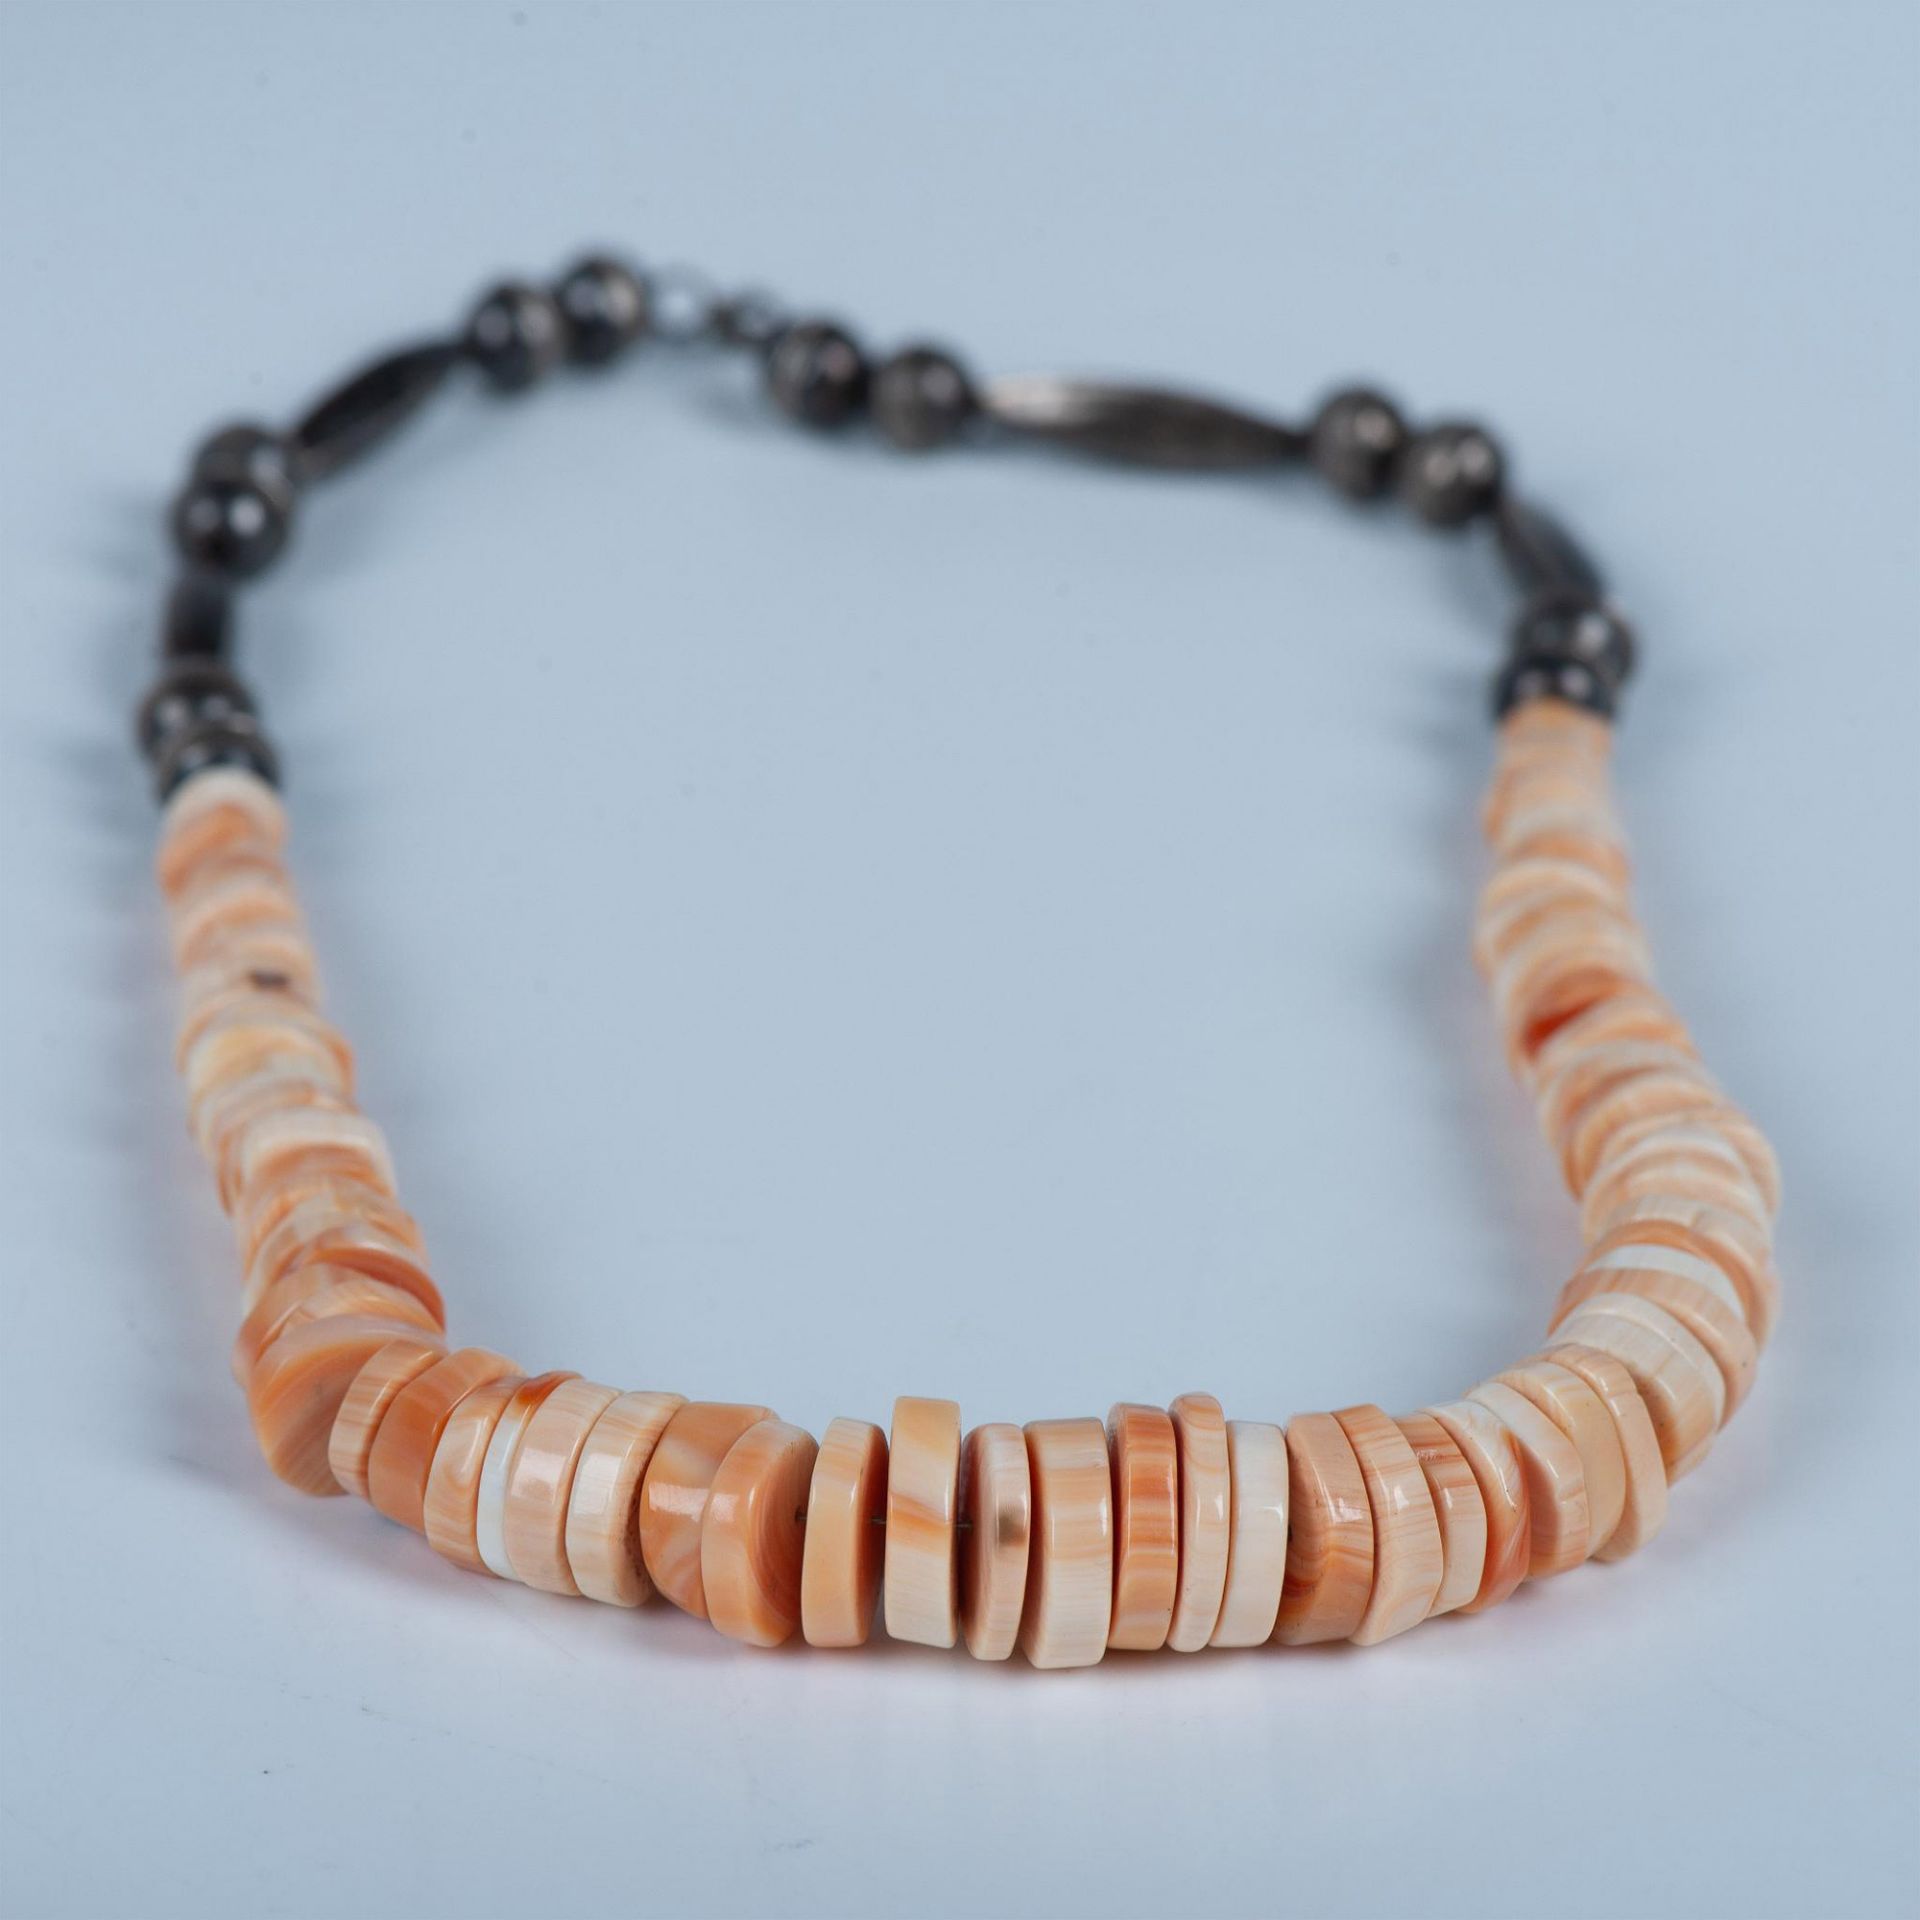 Handmade Native American Heishi Bead Necklace - Image 5 of 5